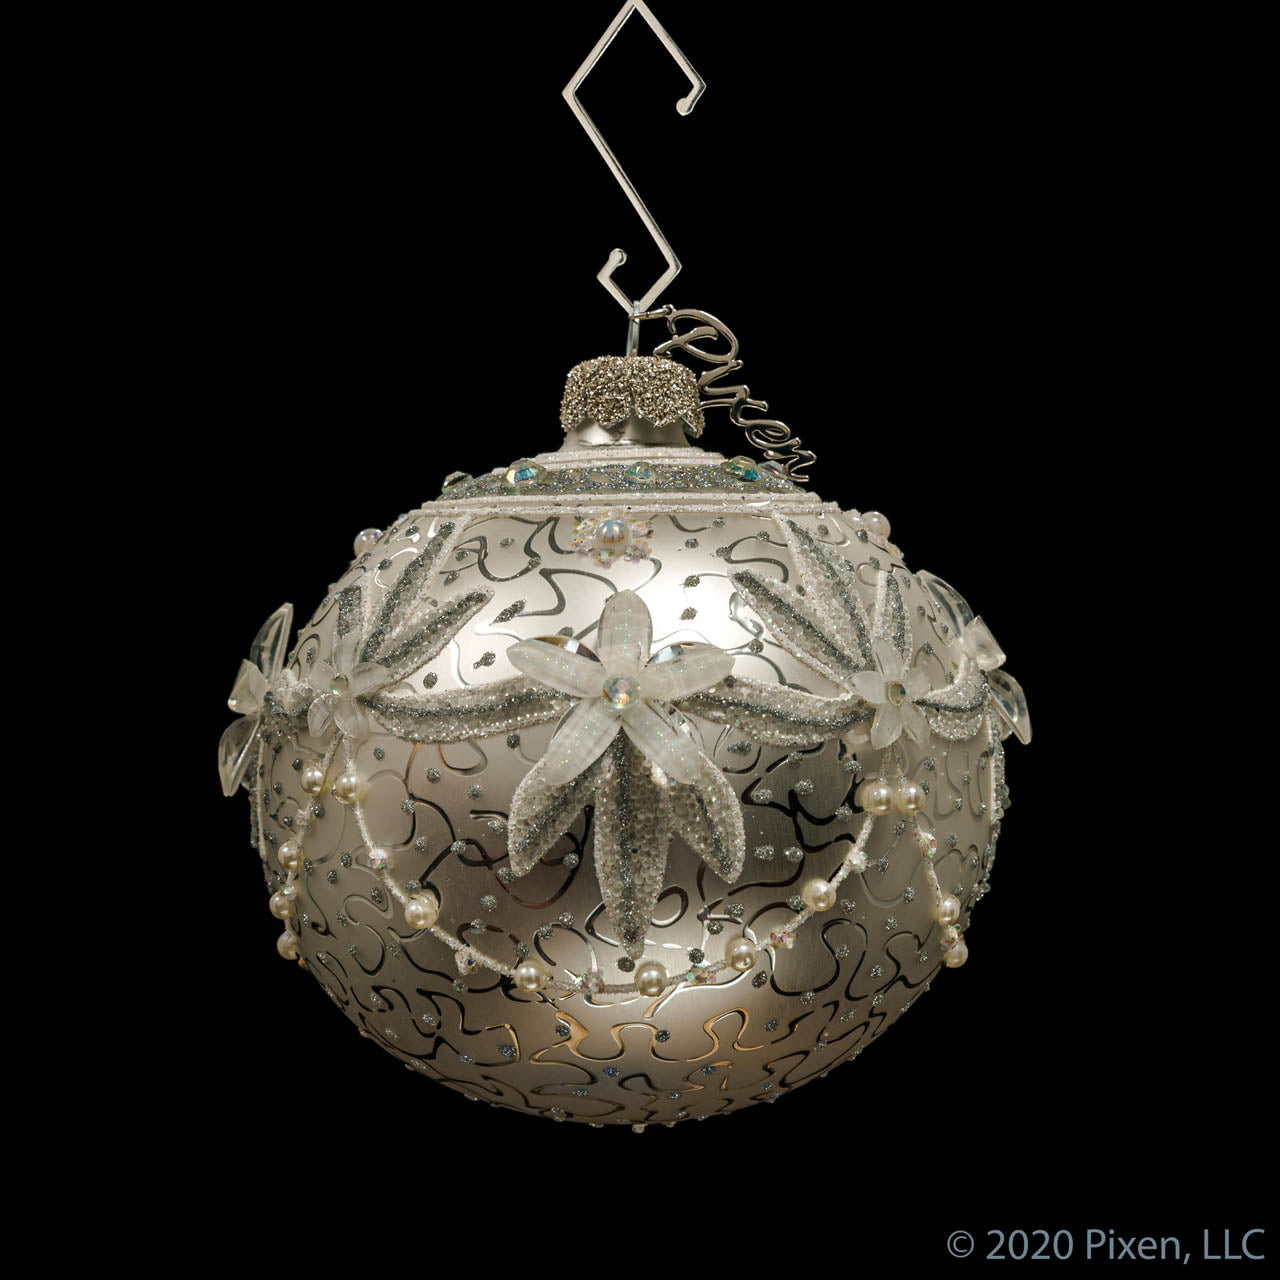 Luna glass Christmas ornament by Pixen